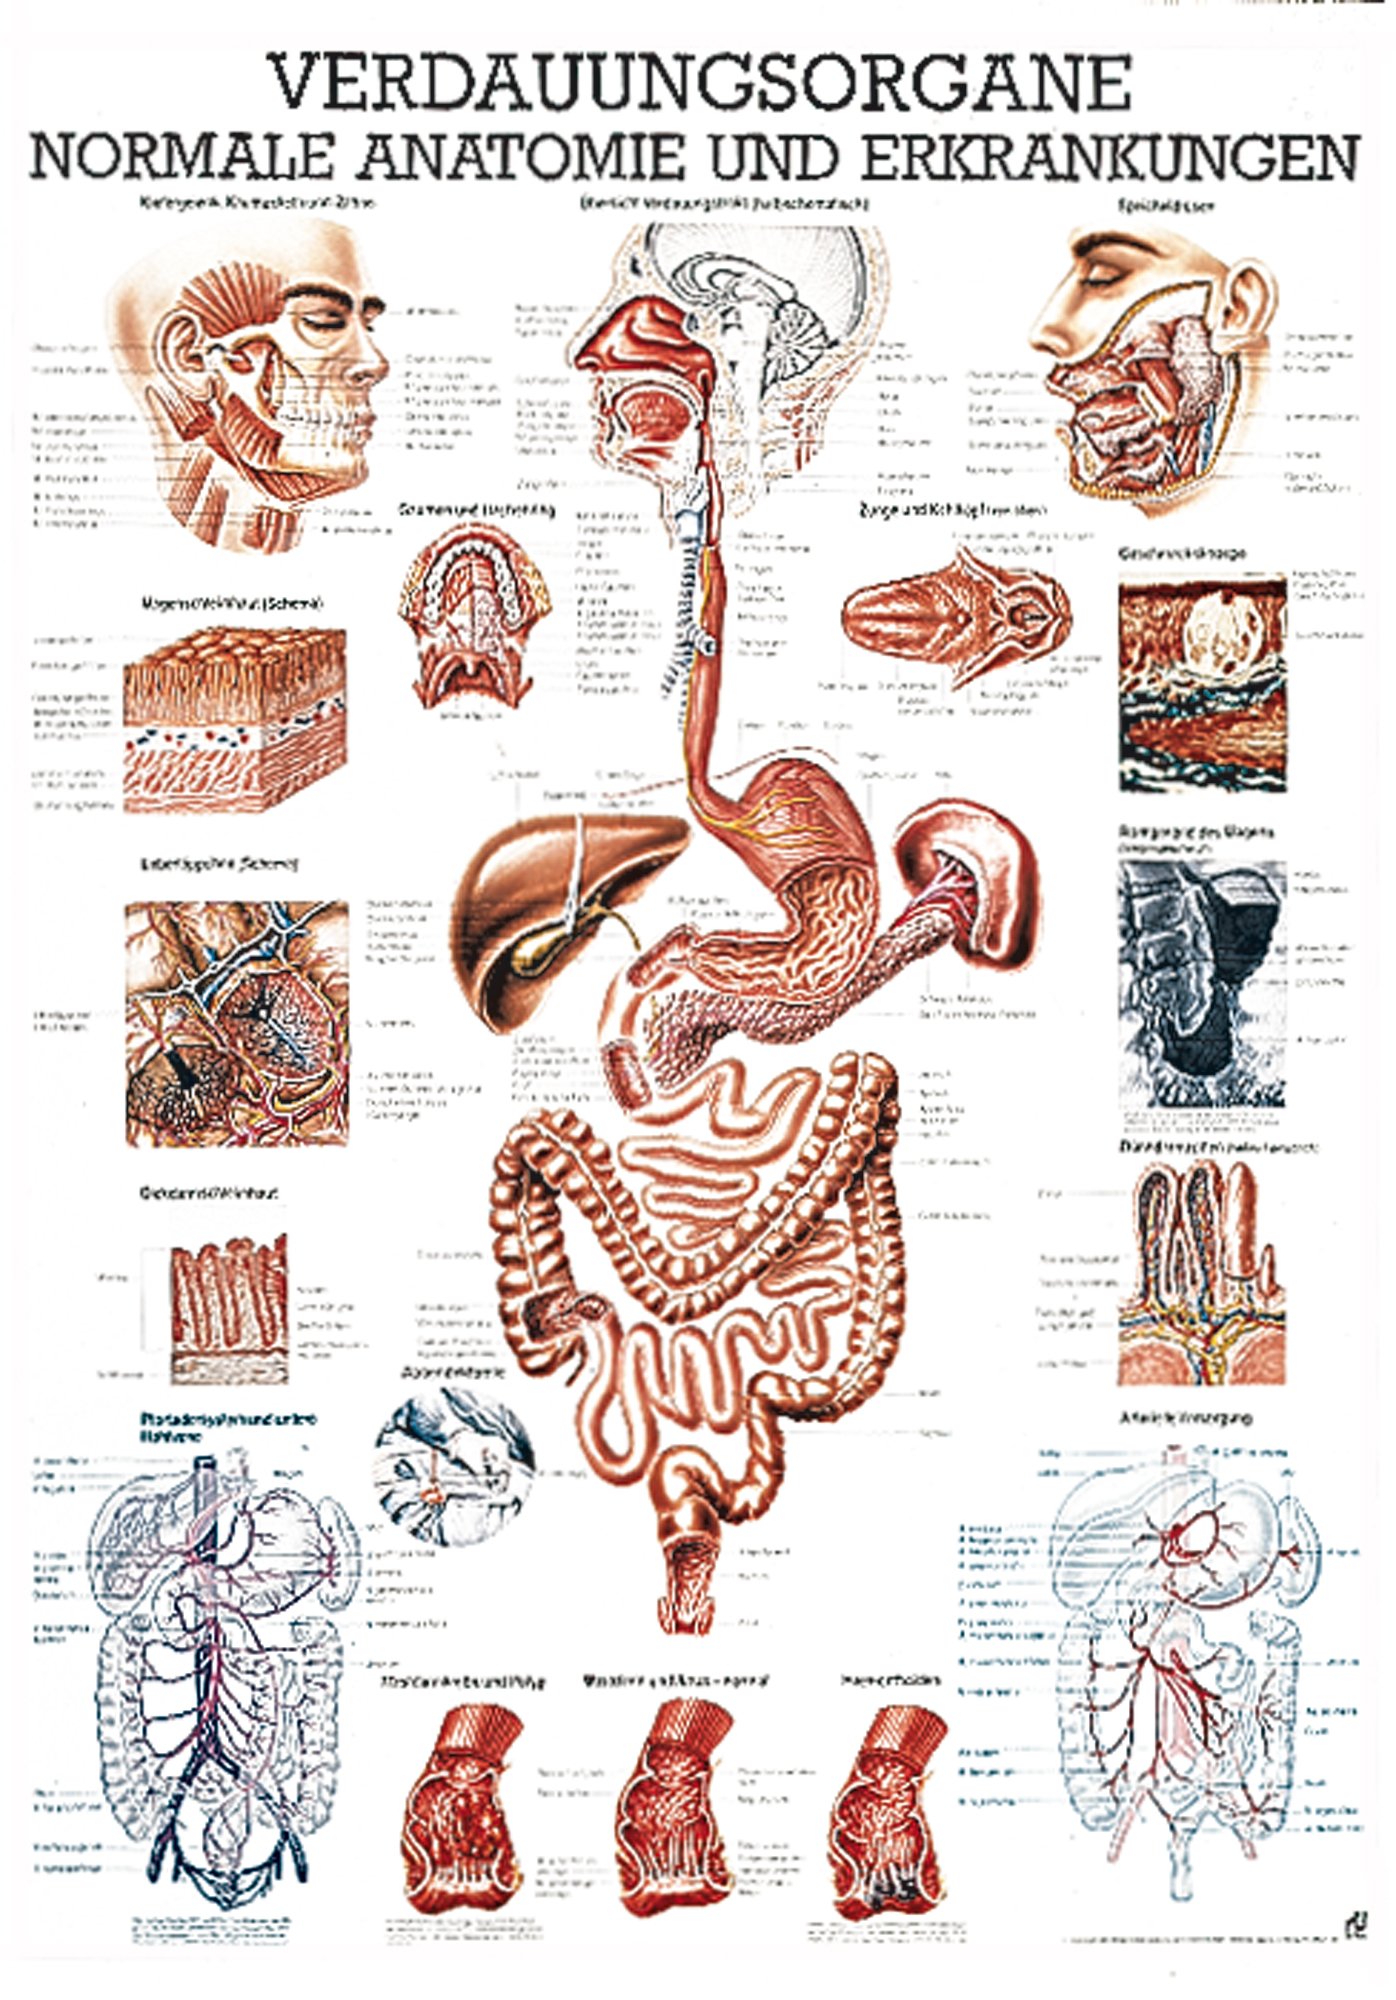 Ruediger Anatomie TA17 Verdauungsorgane Tafel, 70 cm x 100 cm, Papier